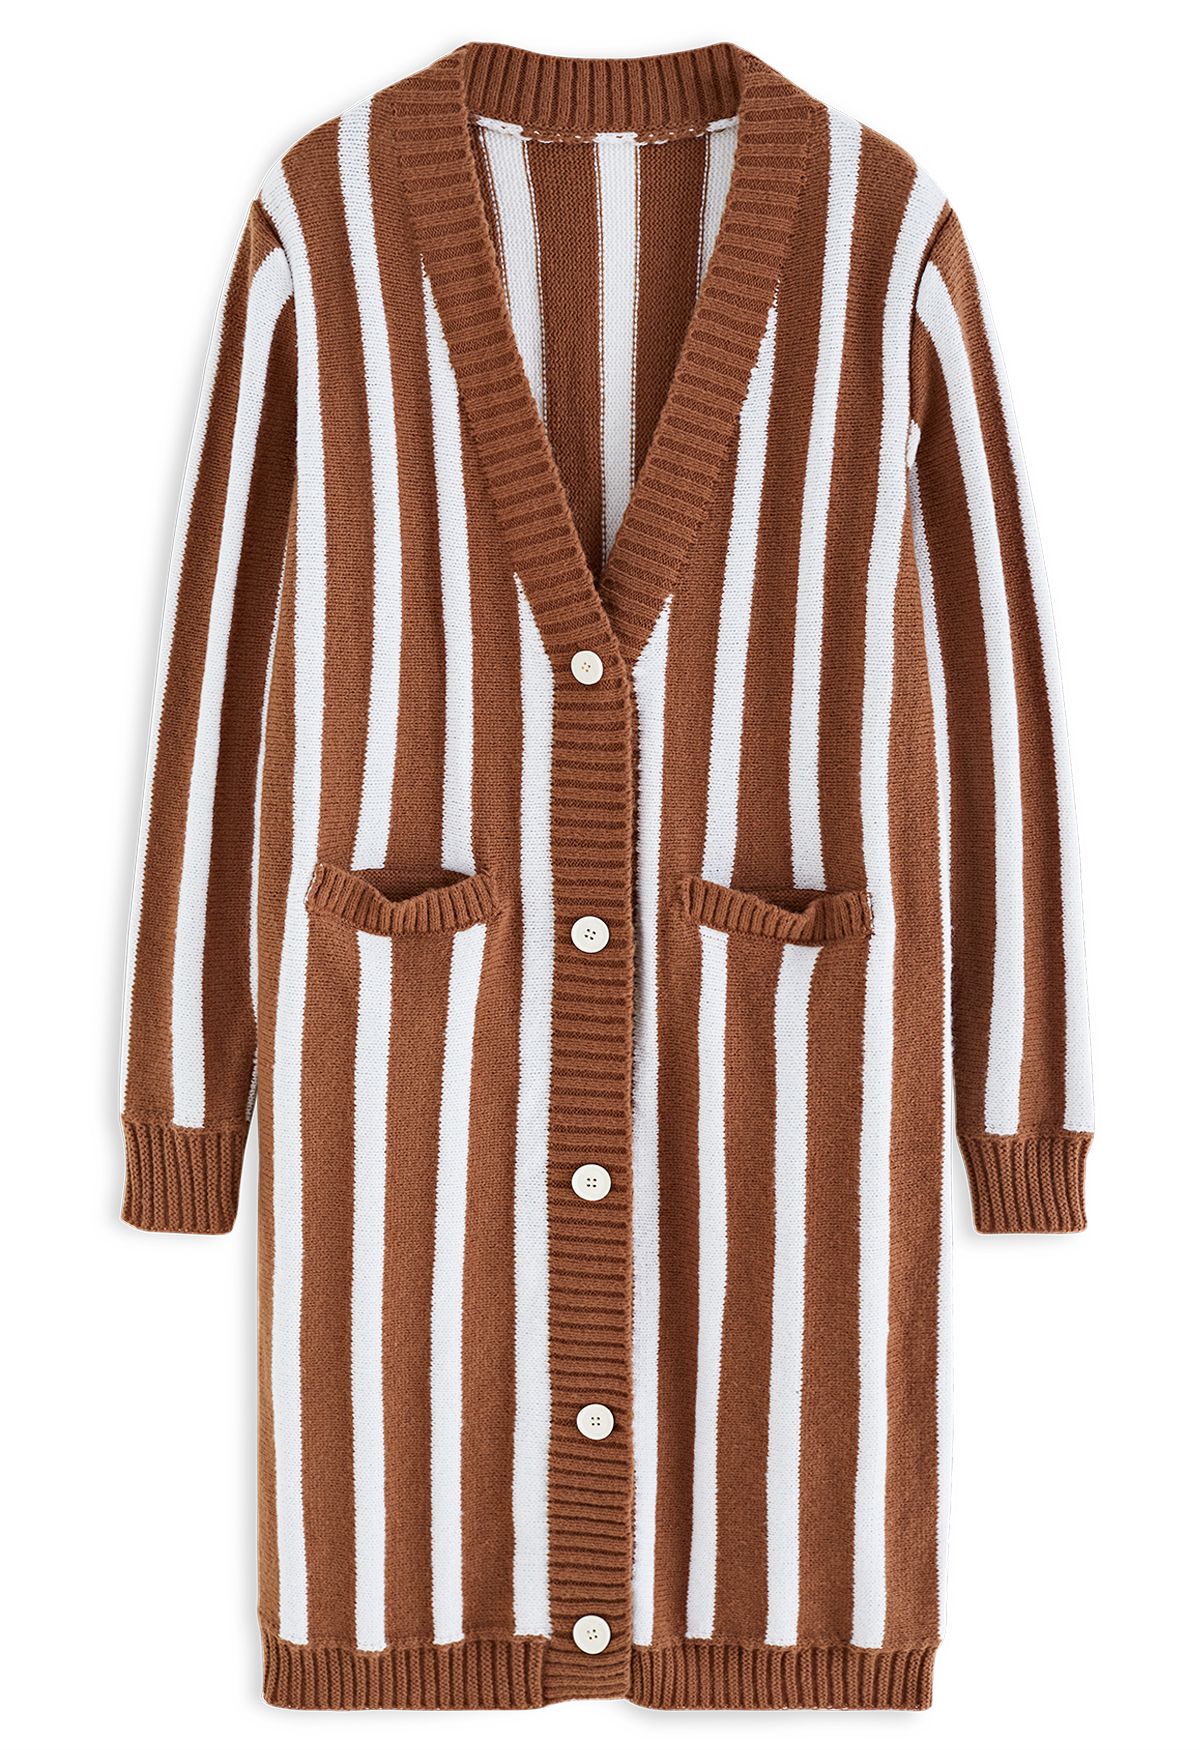 Striped Button Down Longline Cardigan in Caramel